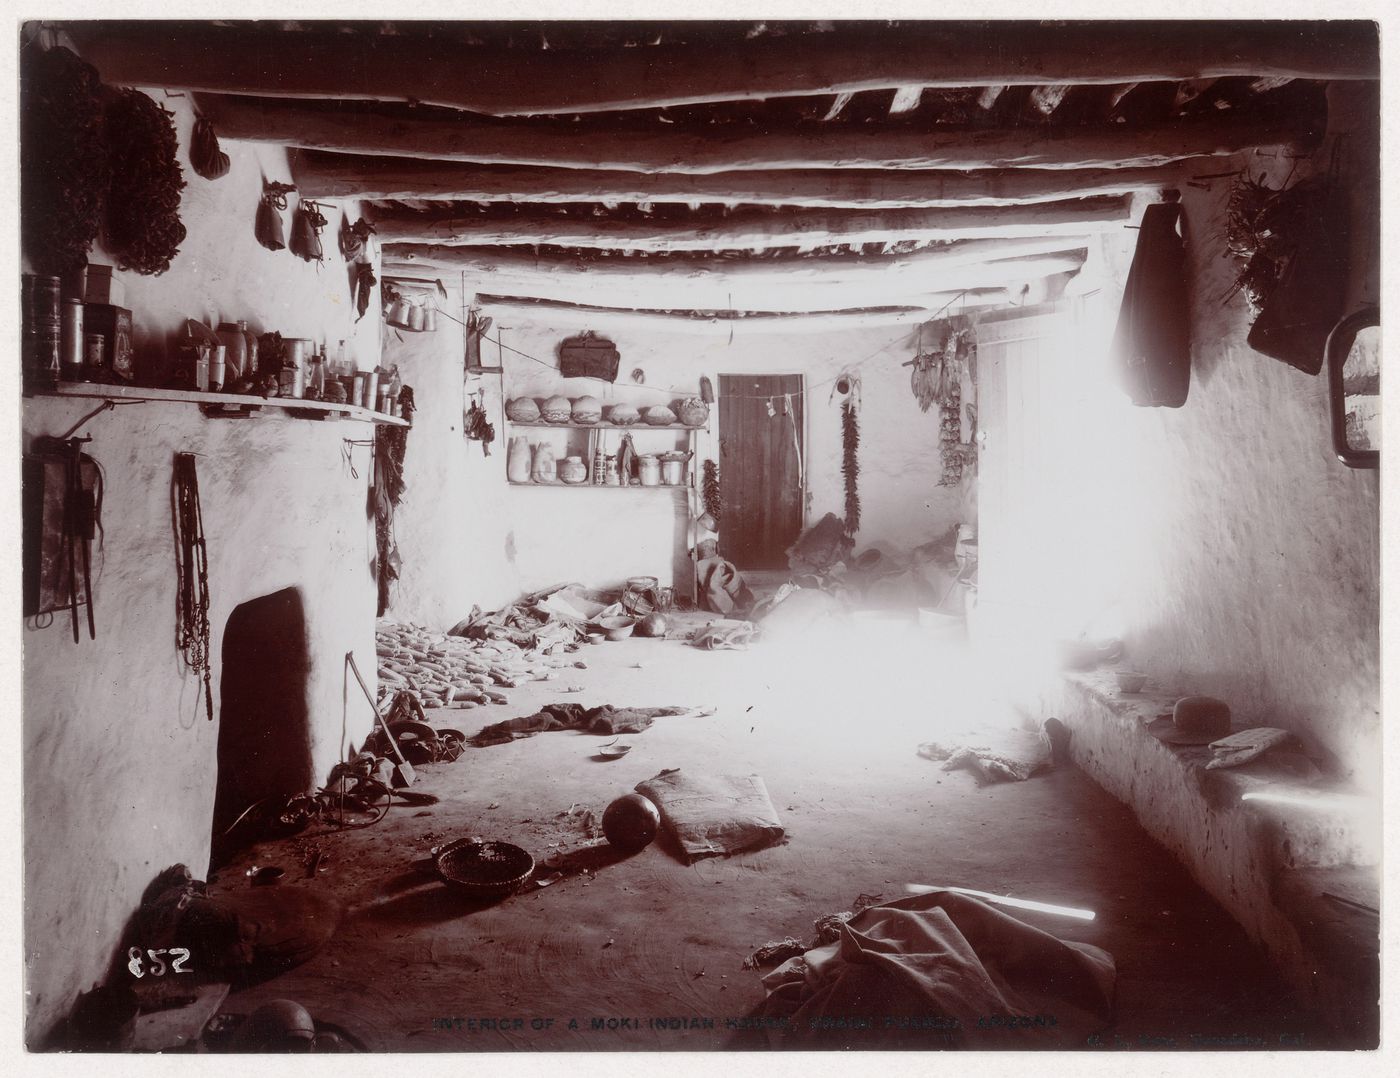 View of interior of a Moqui home, Oraibi (now Old Oraibi), Arizona, United States